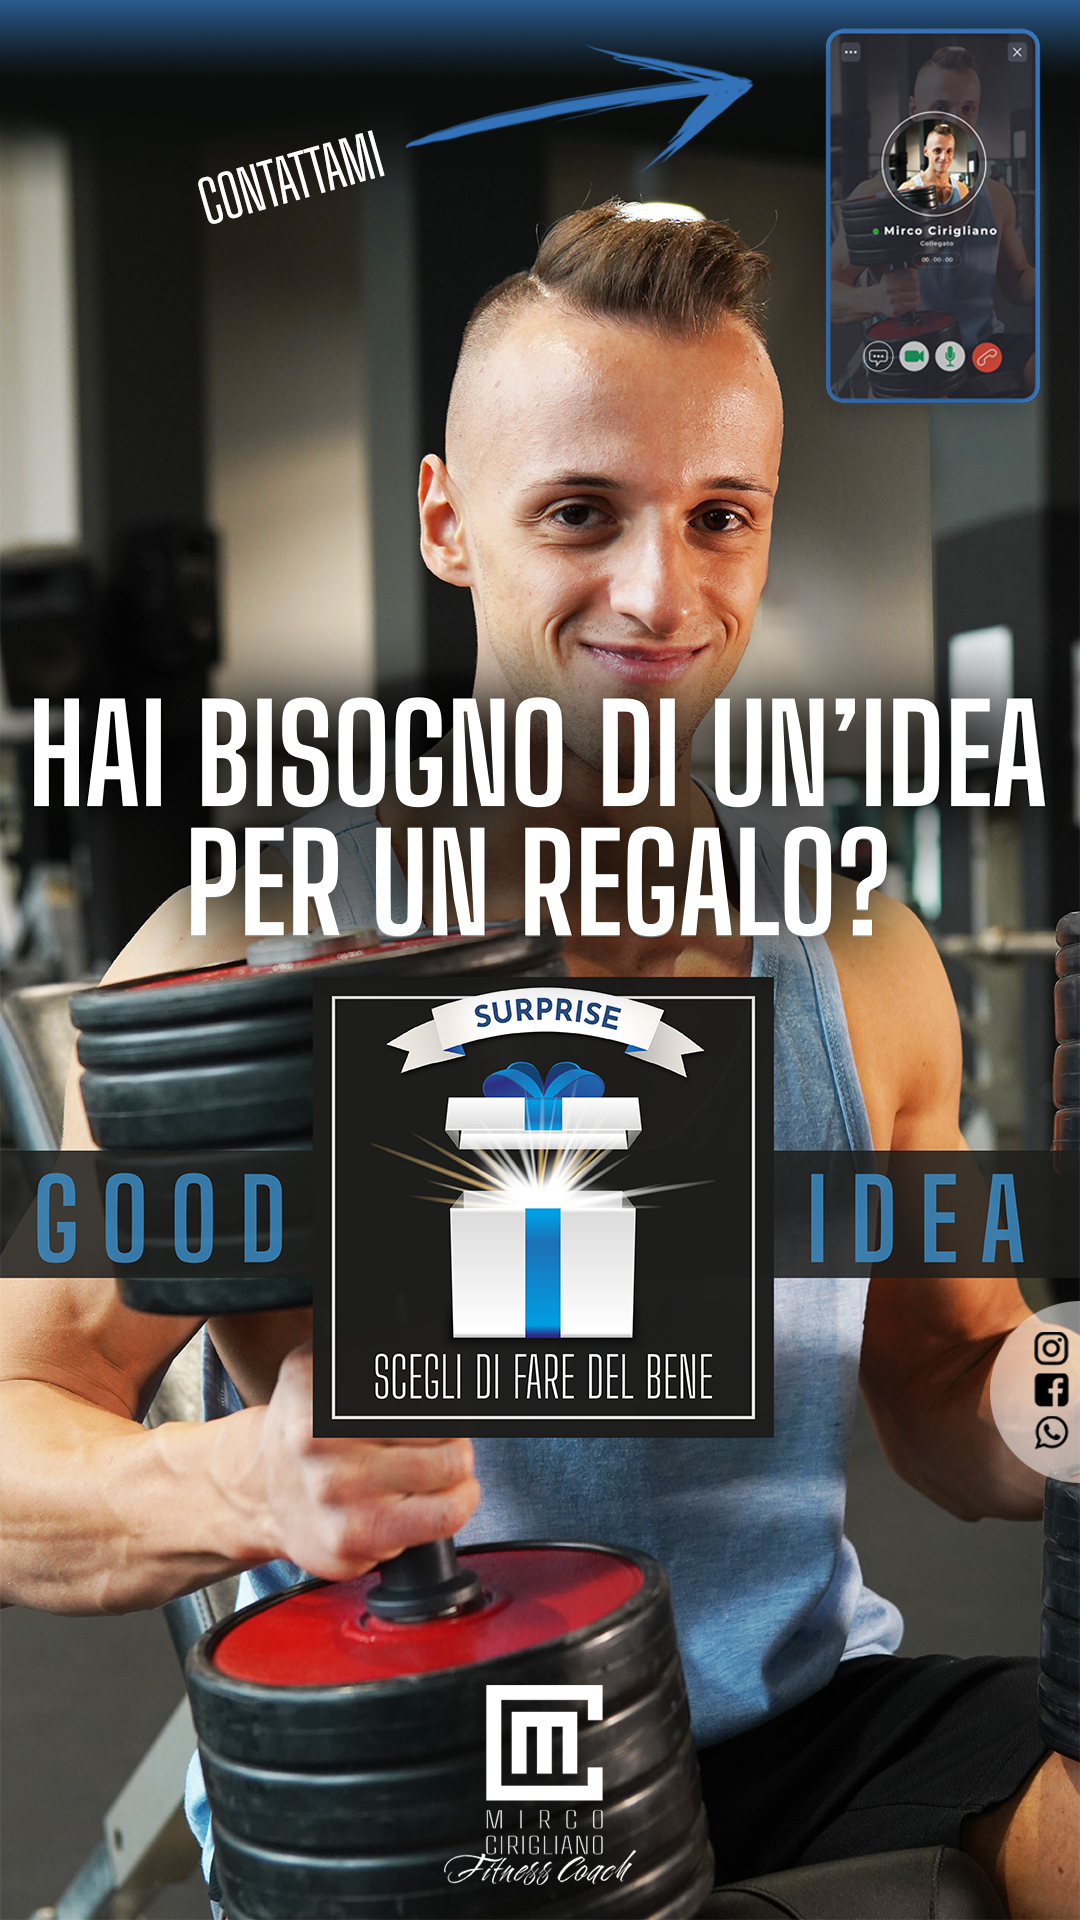 Portachiavi Gym ONE MORE REP Motivazione Regalo Gym Regalo Personal Trainer  Weight Lifter Bodybuilding Regslo Fitness Wod & Fit -  Italia